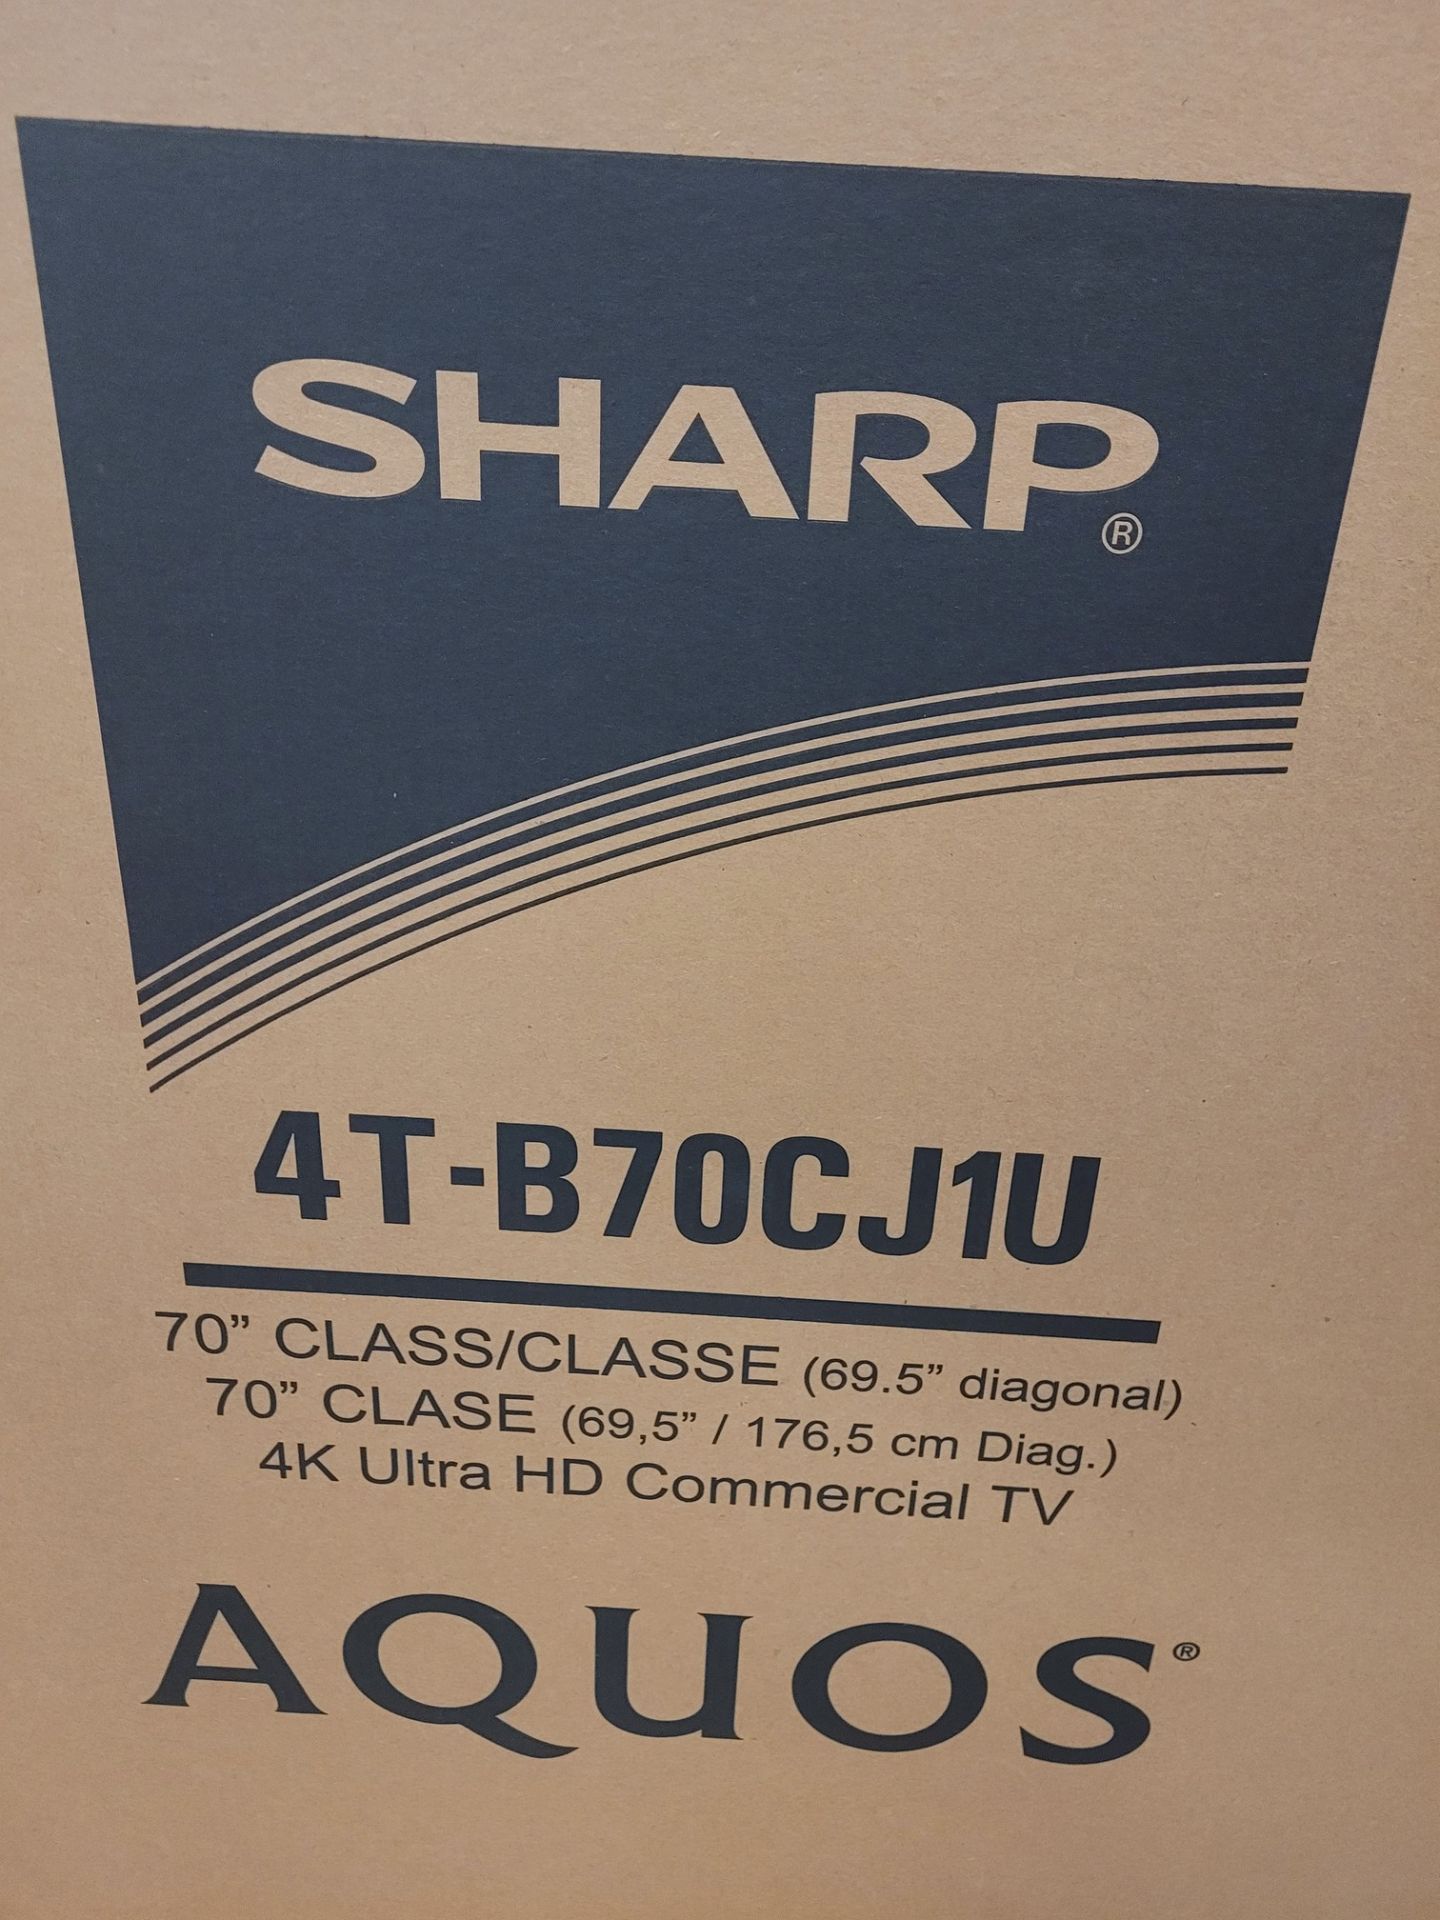 SHARP 4T-B70CJ1U A AQUOS 70" CLASS 4K ULTRA HD COMMERCIAL TV, S/N 206437012 - Image 4 of 5